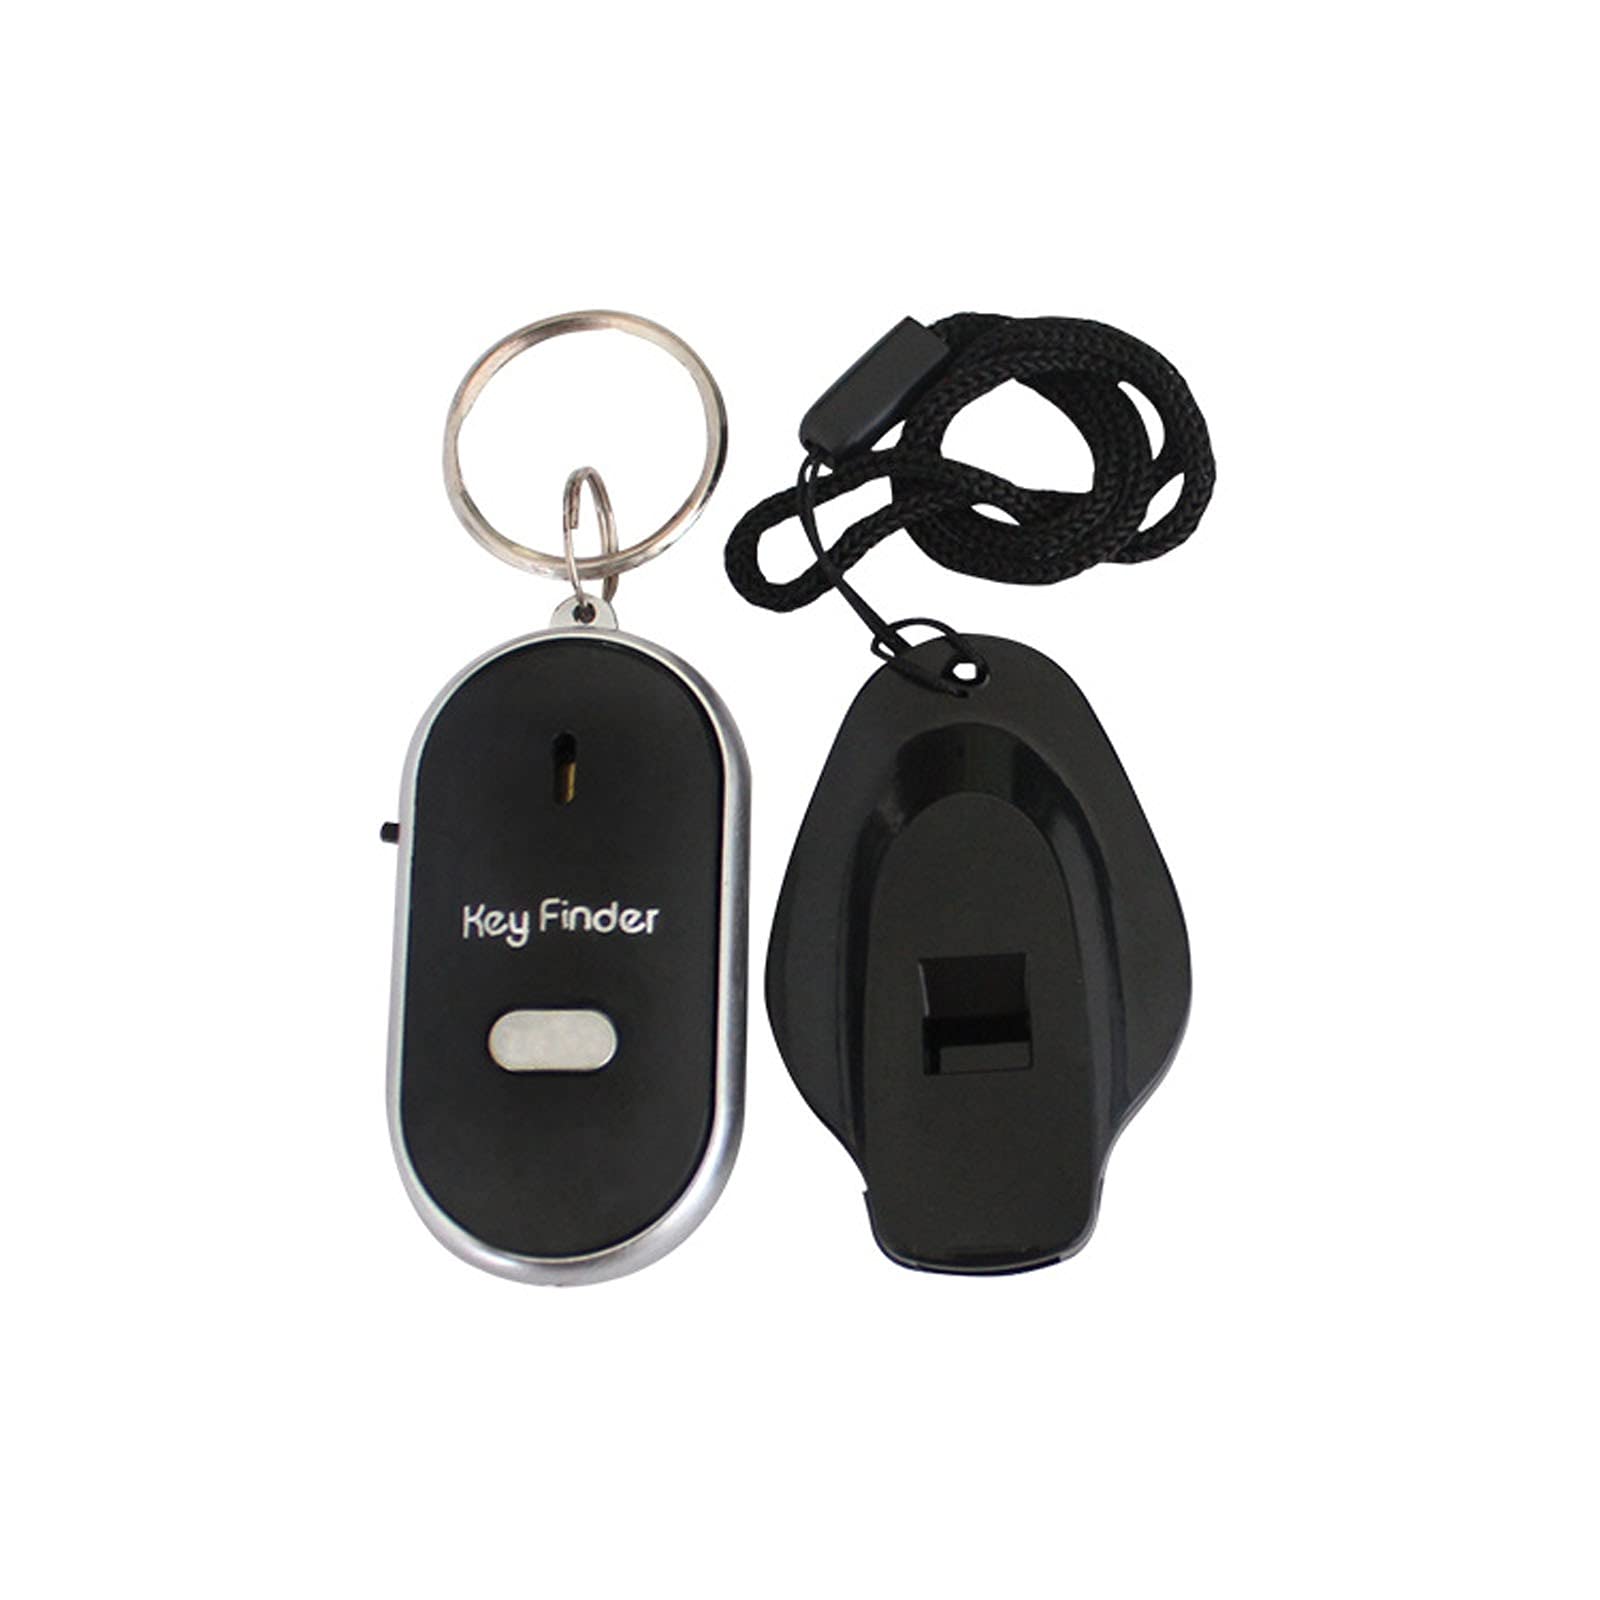 SolwDa Smart Key Finder - LED Light Torch Remote Sound Control Lost Key Finder - Portable Key Chain Flash Light for Elderly Find Keys Keychain Wallet Outdoor - Easy to Use Key Locator Device